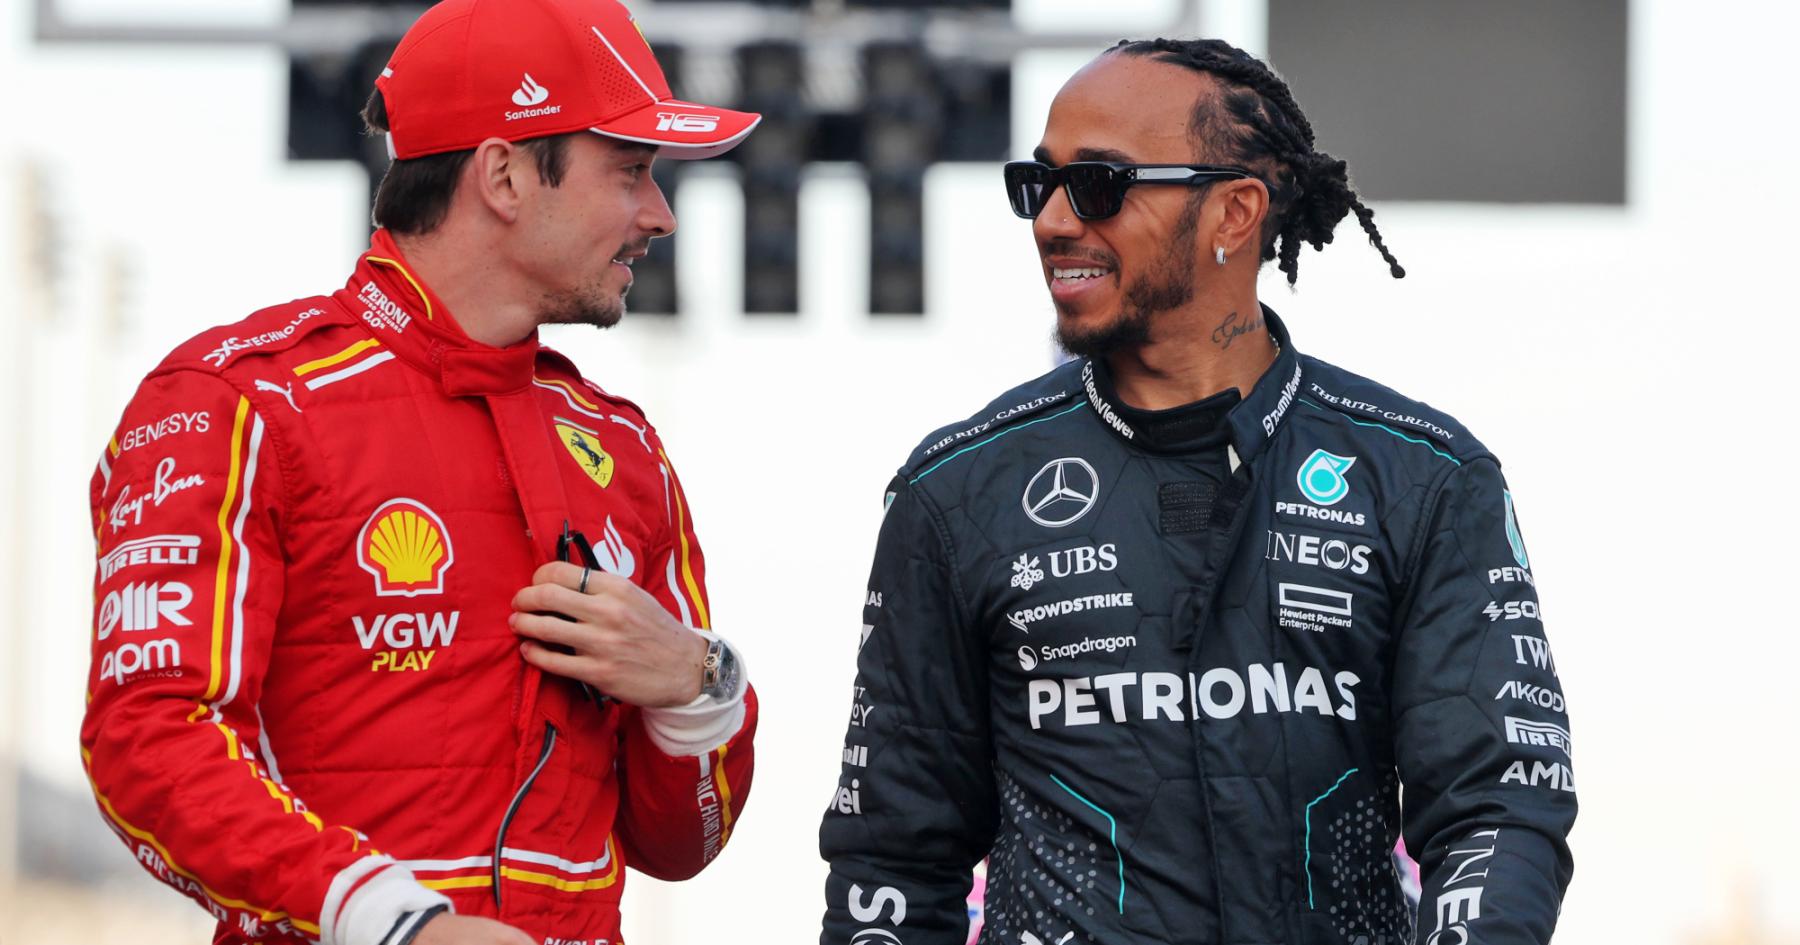 Leclerc senses opportunity amid Hamilton partnership